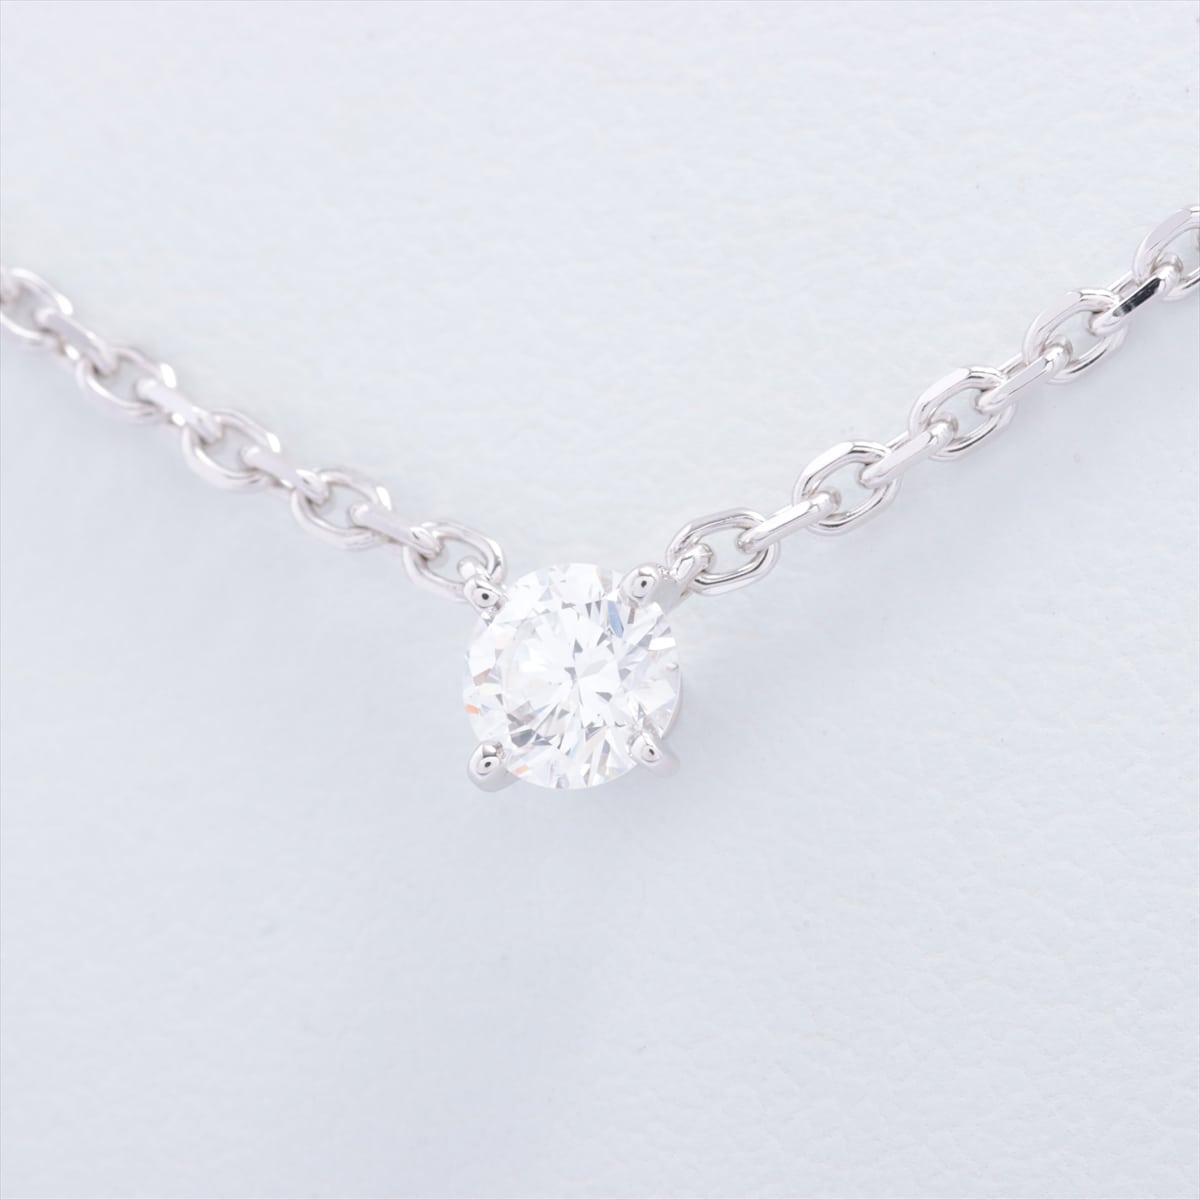 Cartier Love Support Chain diamond Necklace 750 WG 4.8g 0.29ct D VVS2 VG FB